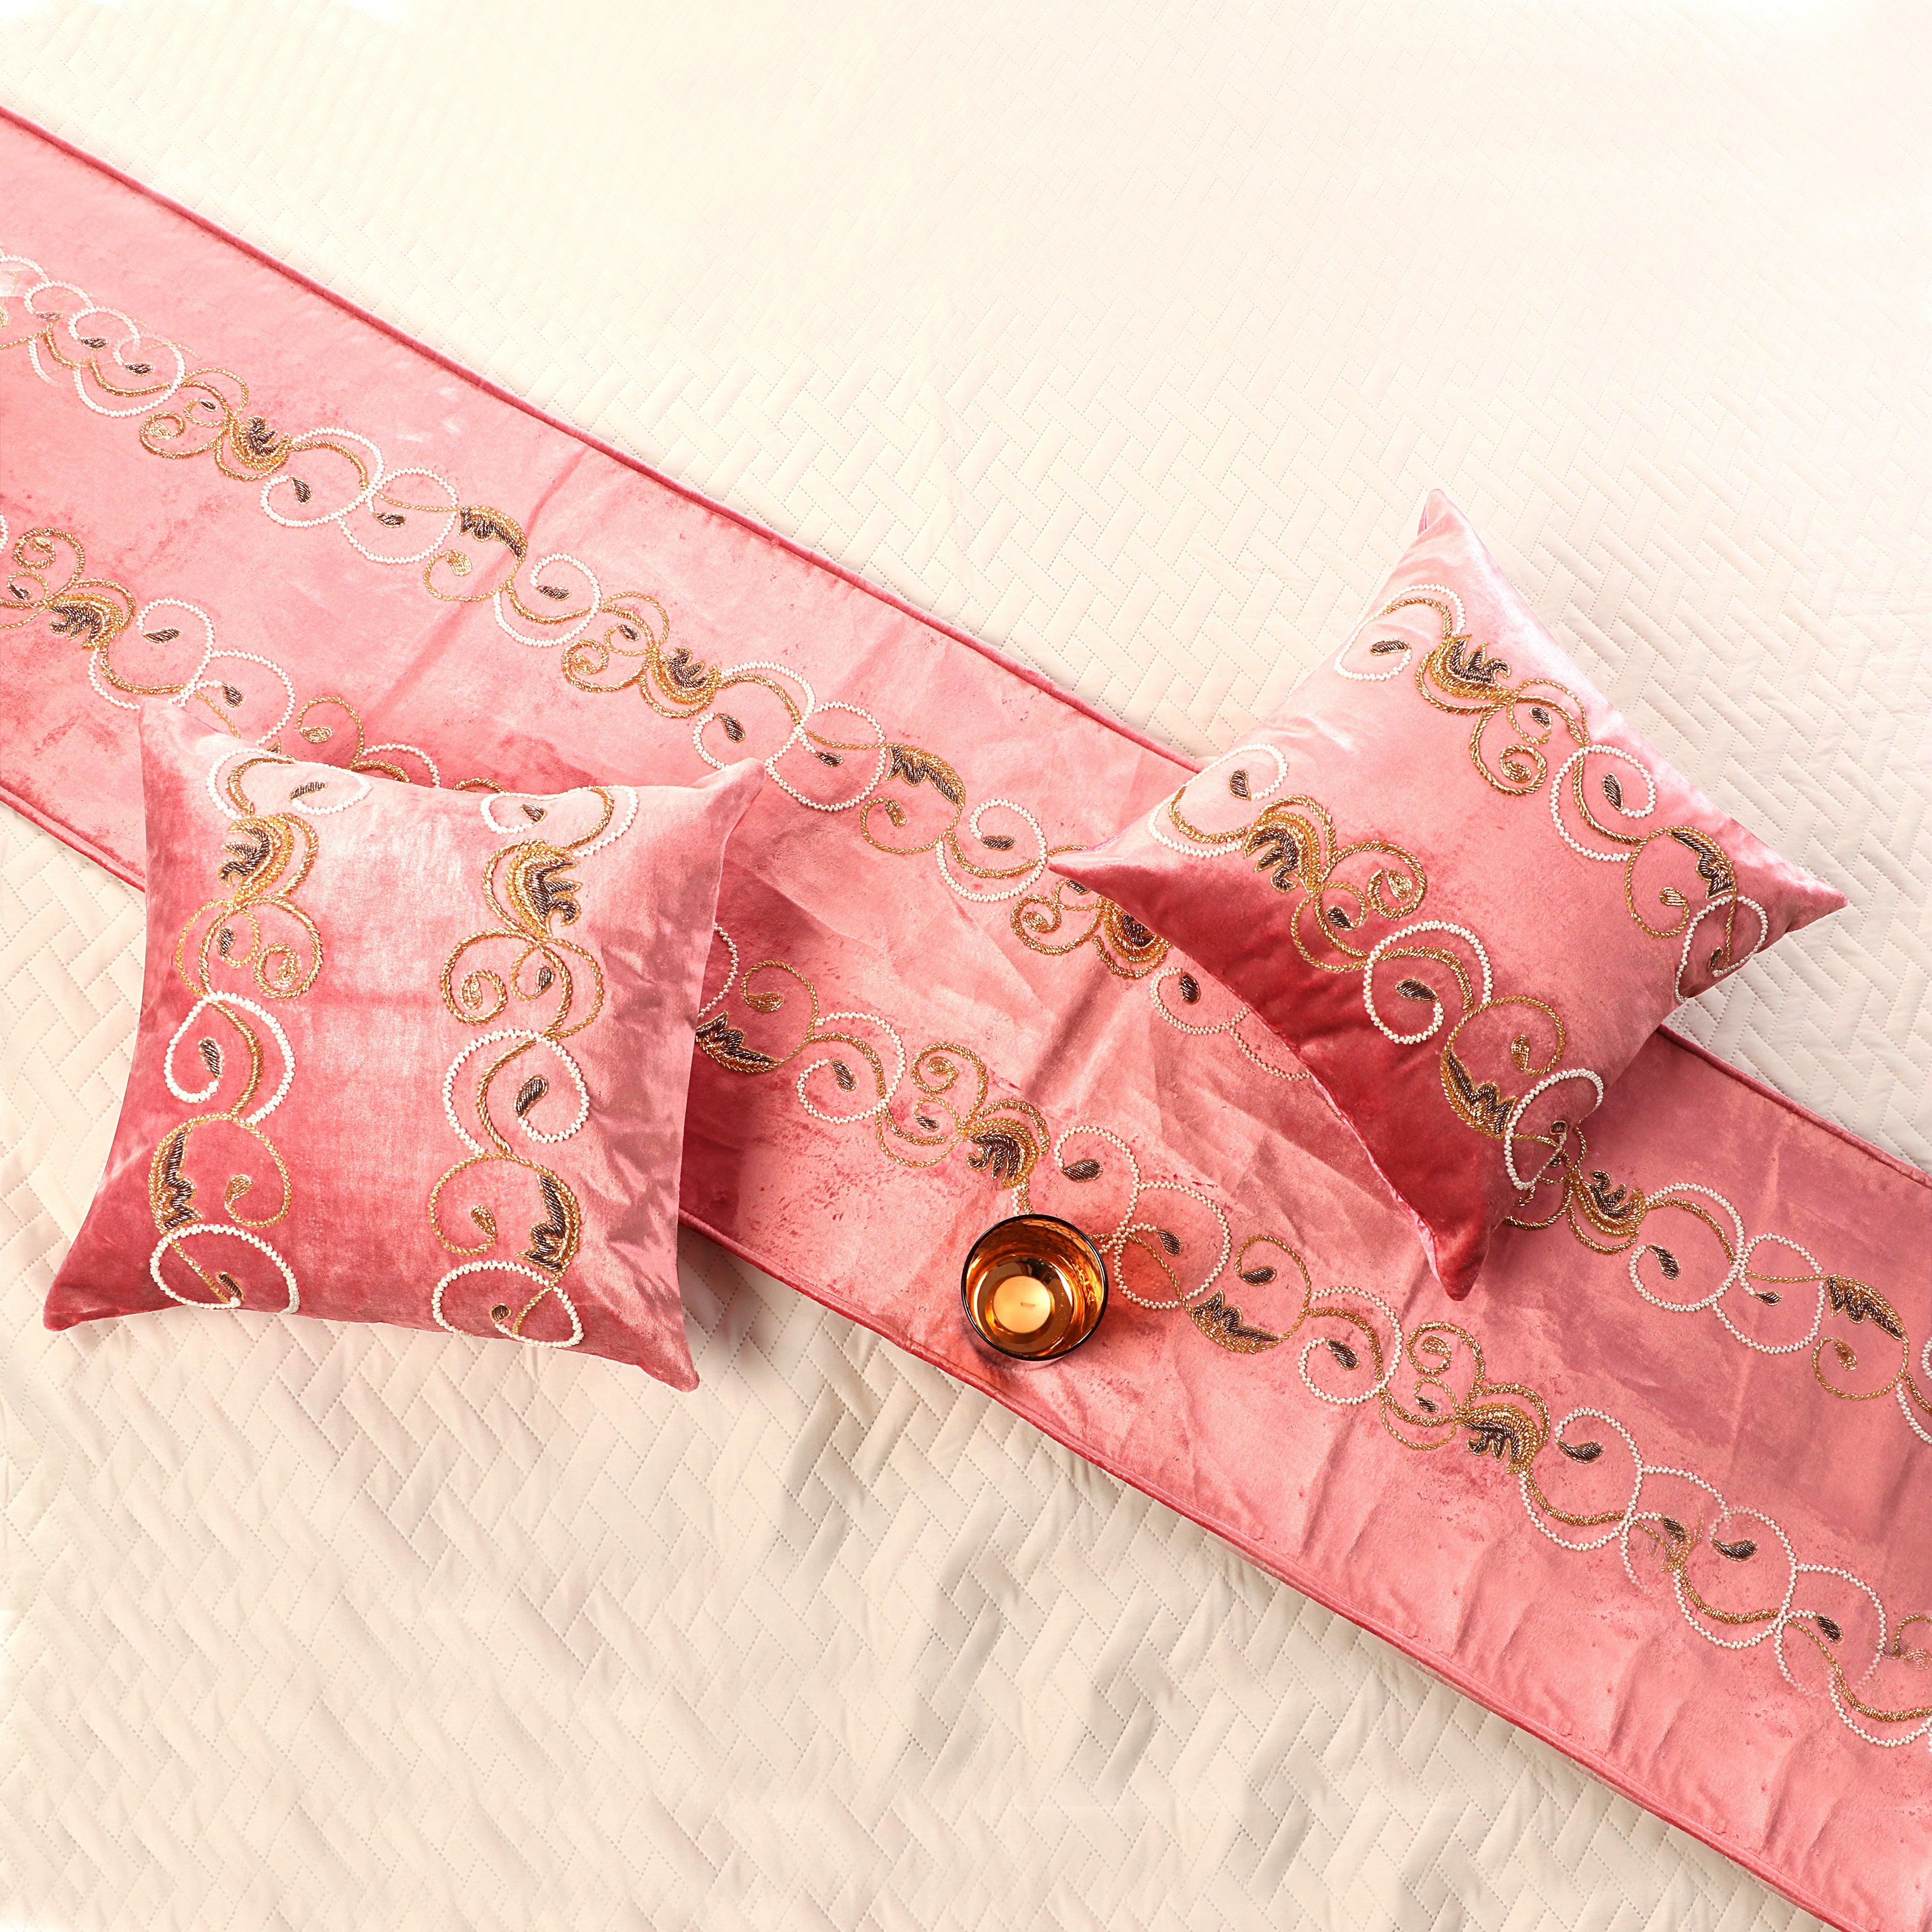 Autumn Swirl -Rose pink Velvet Bed runner With Matching Decorative Throw Pillows Handbeaded in swirl leaf pattern